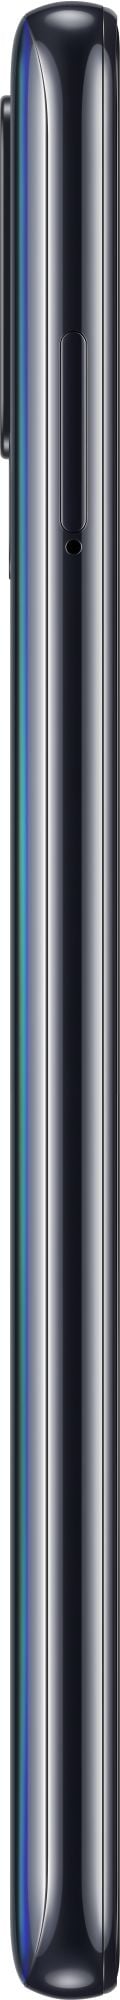 Samsung Galaxy A21s 64GB в хорошем состоянии Black